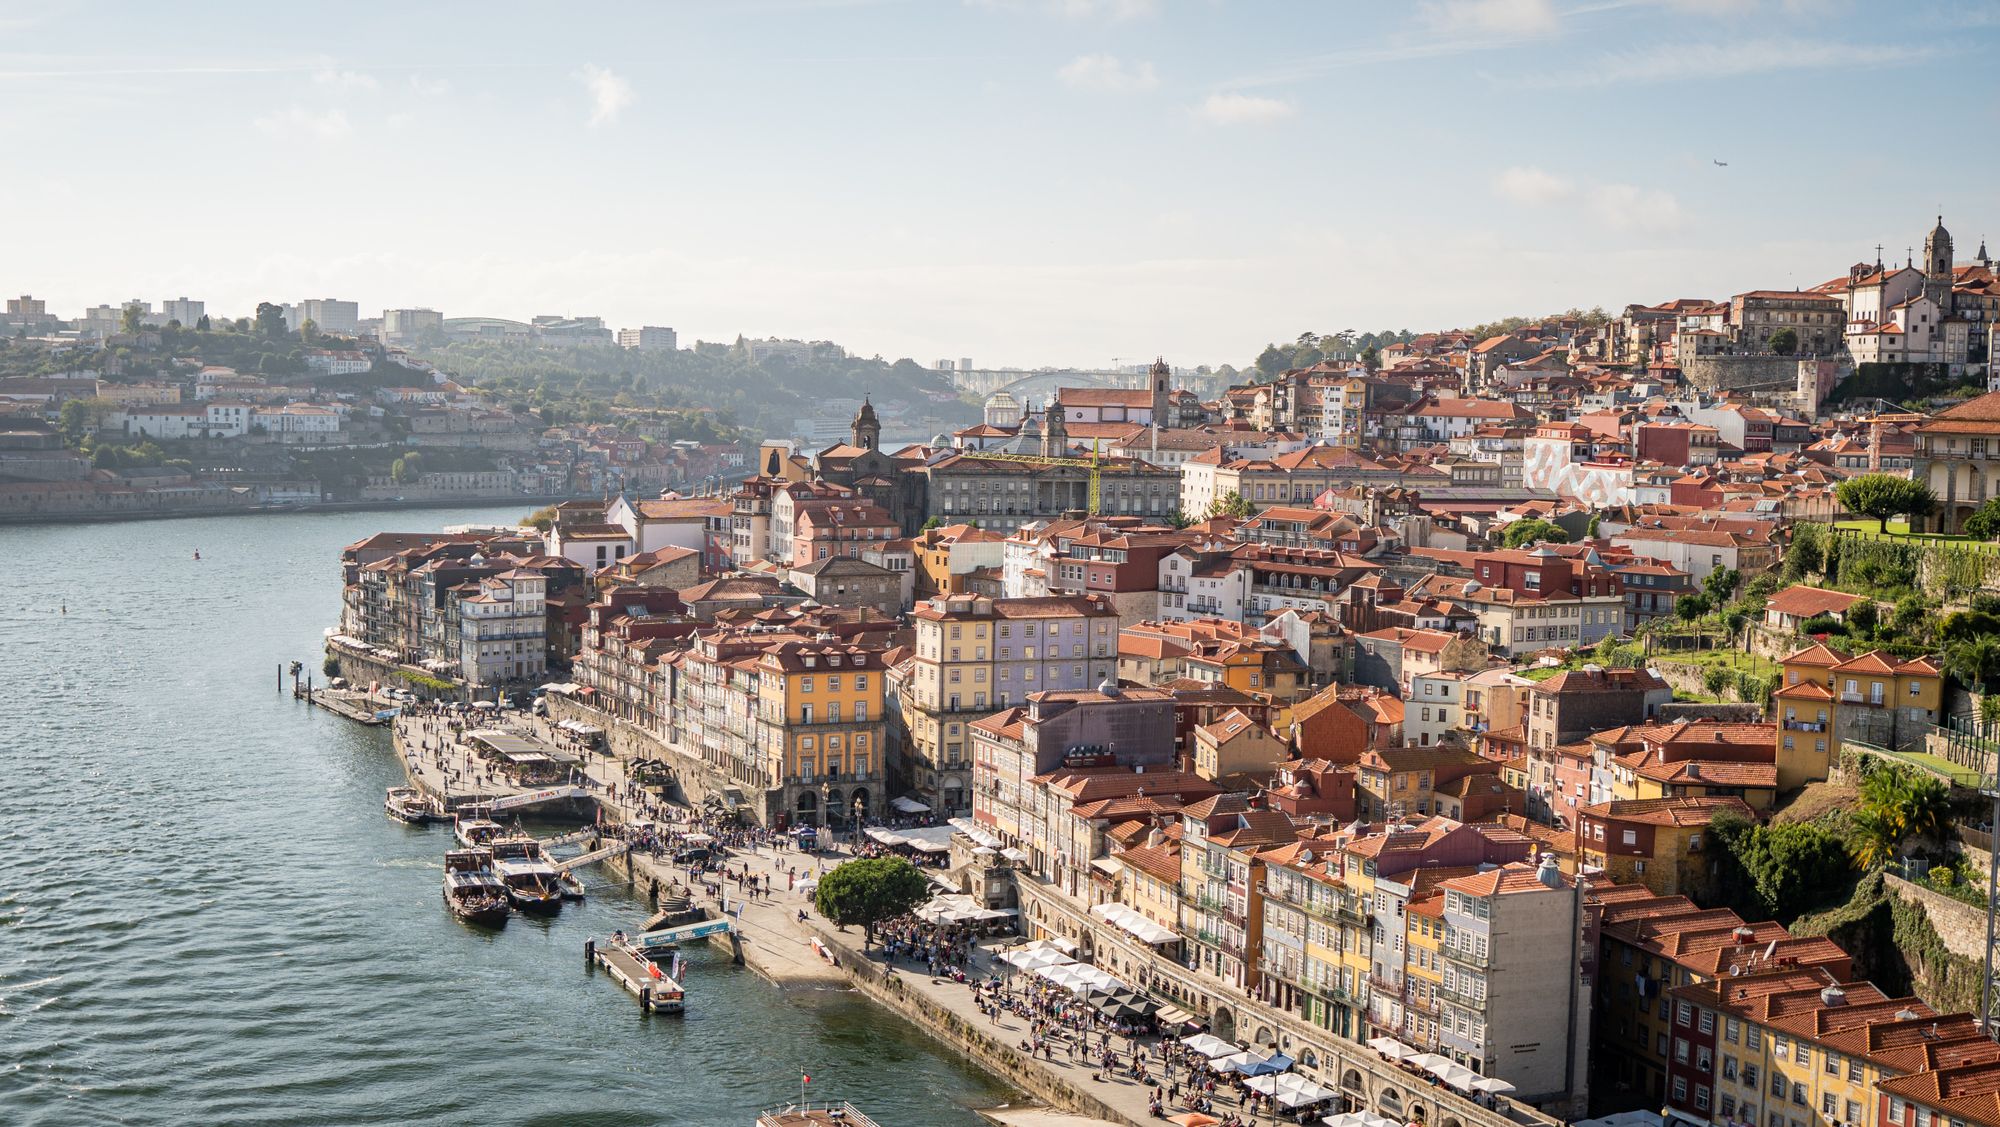 A corner of Lisbon abuts the ocean